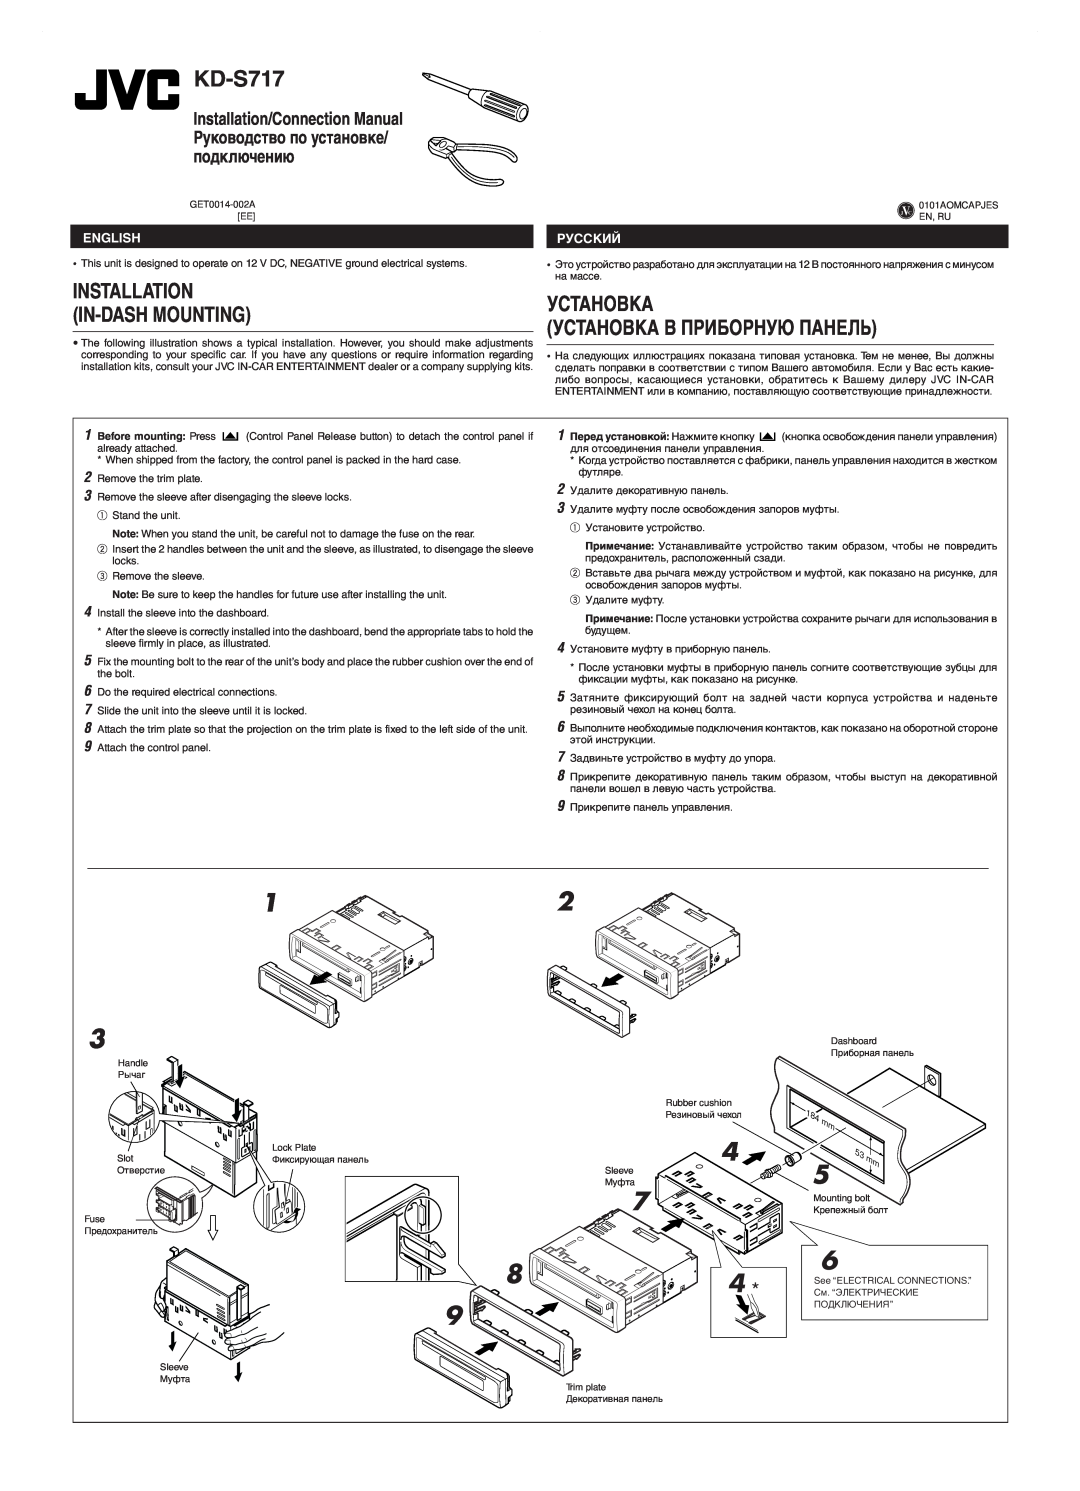 JVC KD-S717 manual Установка Установка В Приборную Панель, Installation In-Dashmounting, English, Русский 